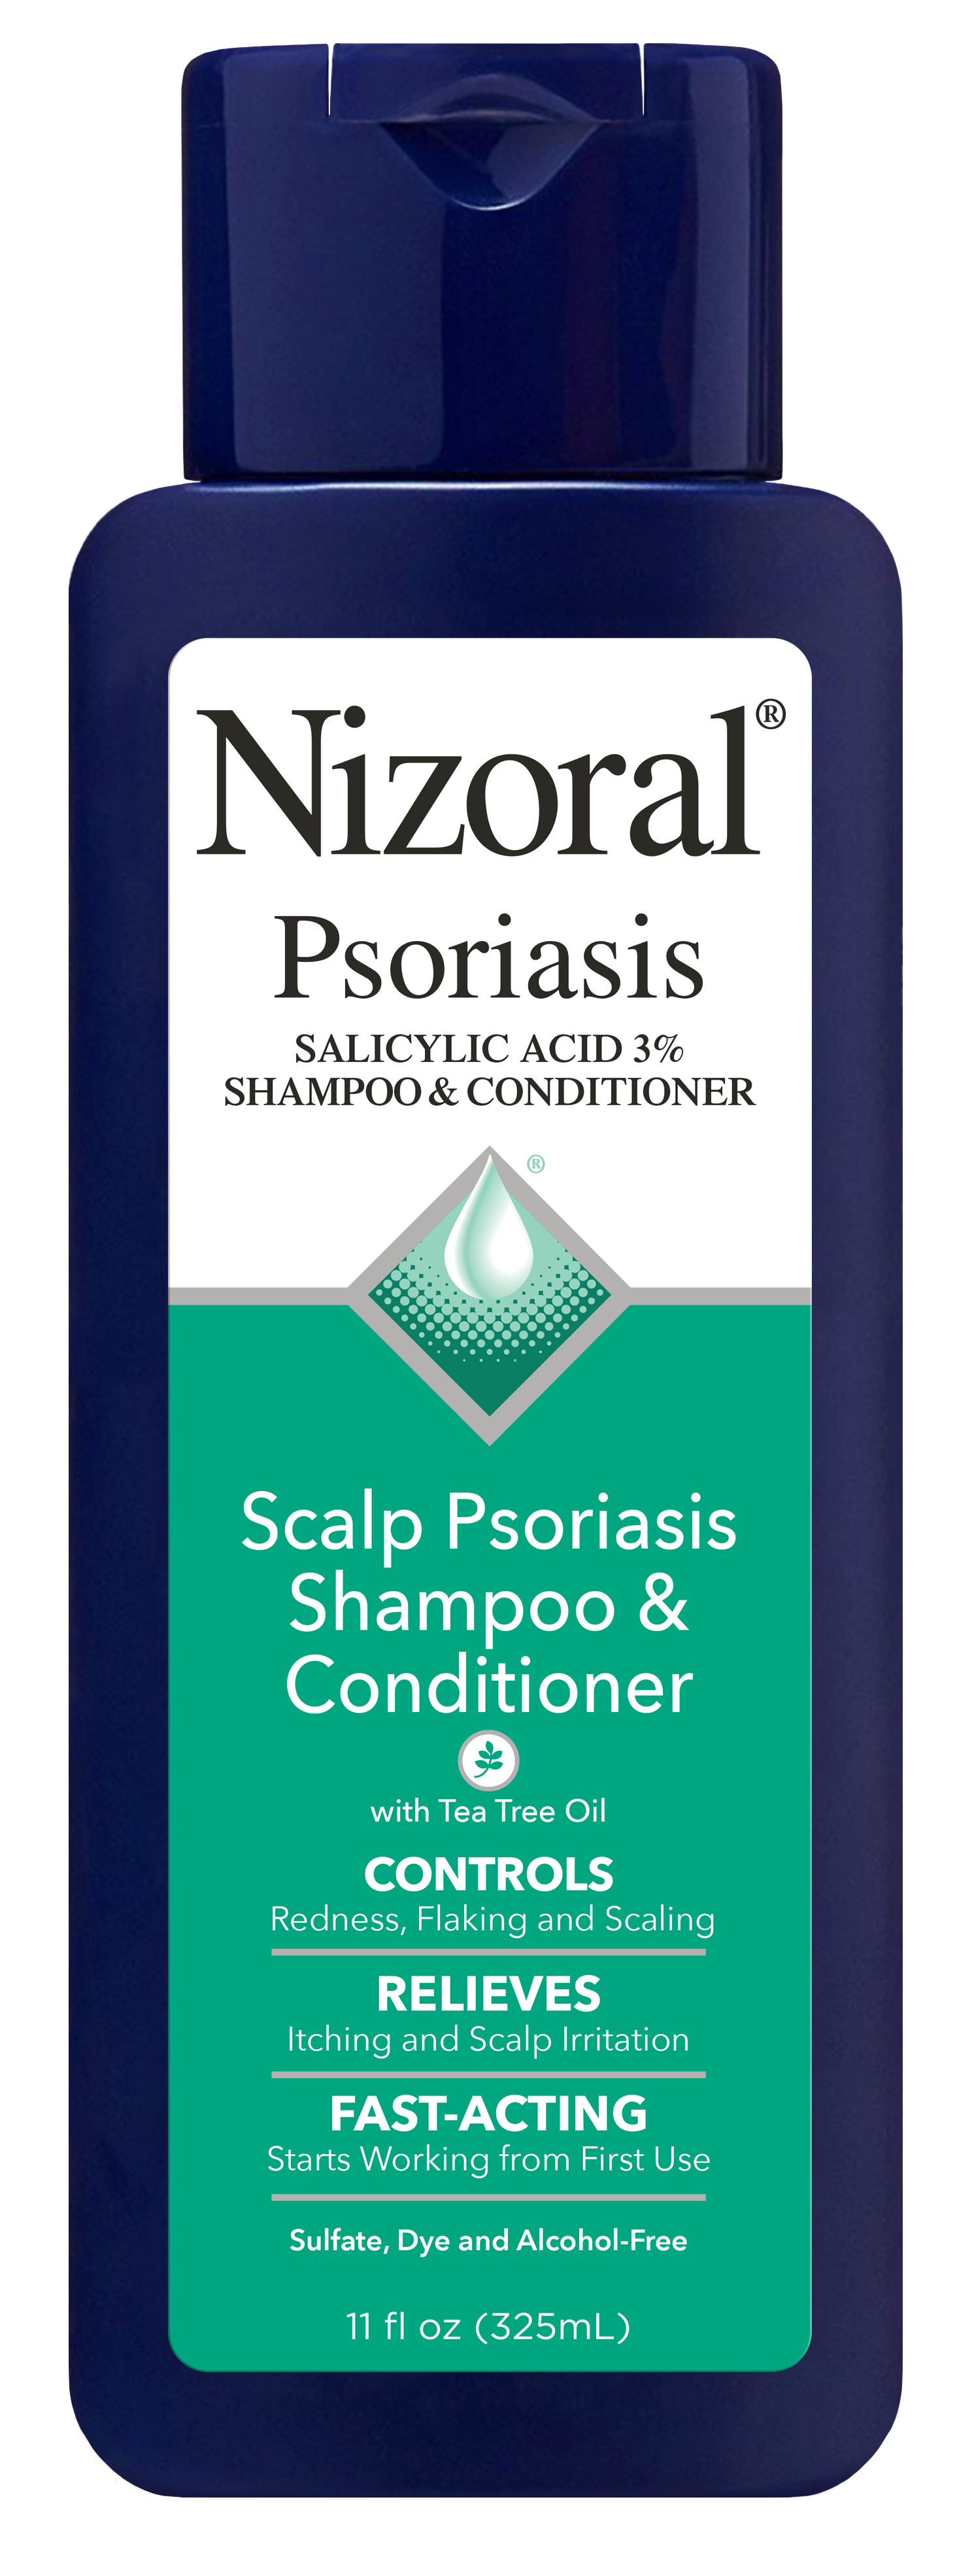 nizoral psoriasis shampoo and conditioner near me)